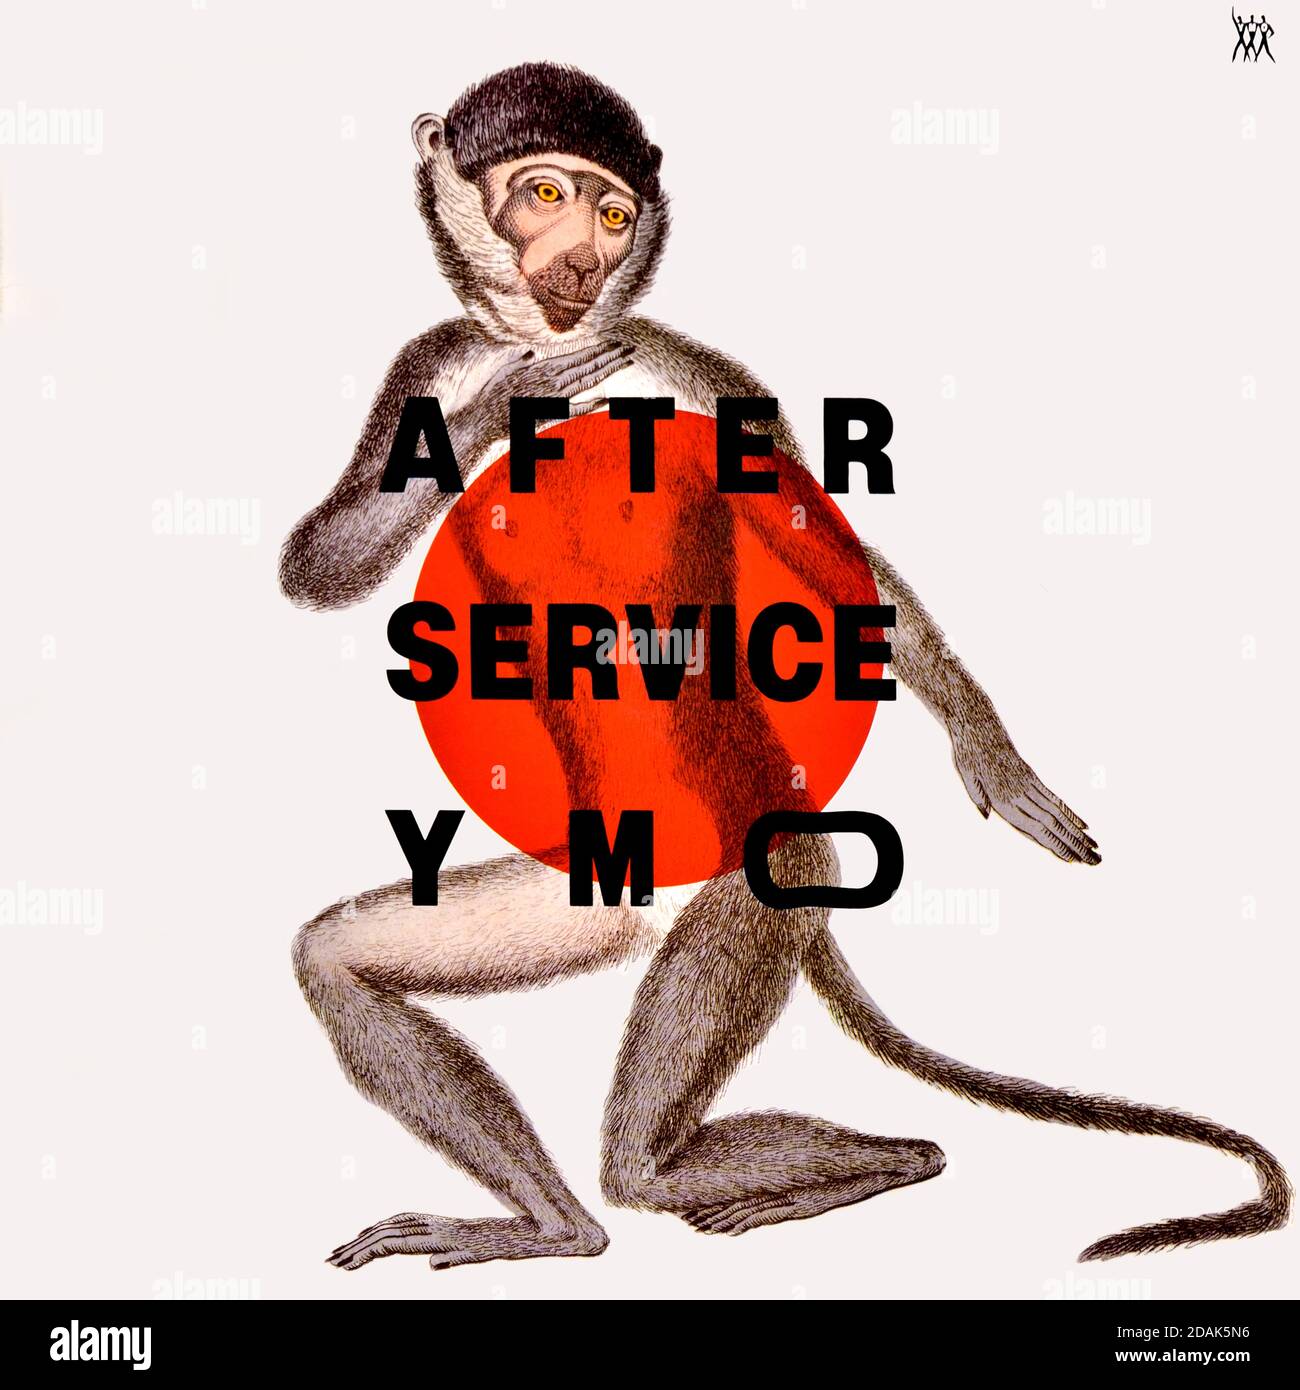 YMO - original Vinyl Album Cover - After Service - 1984 Stockfoto